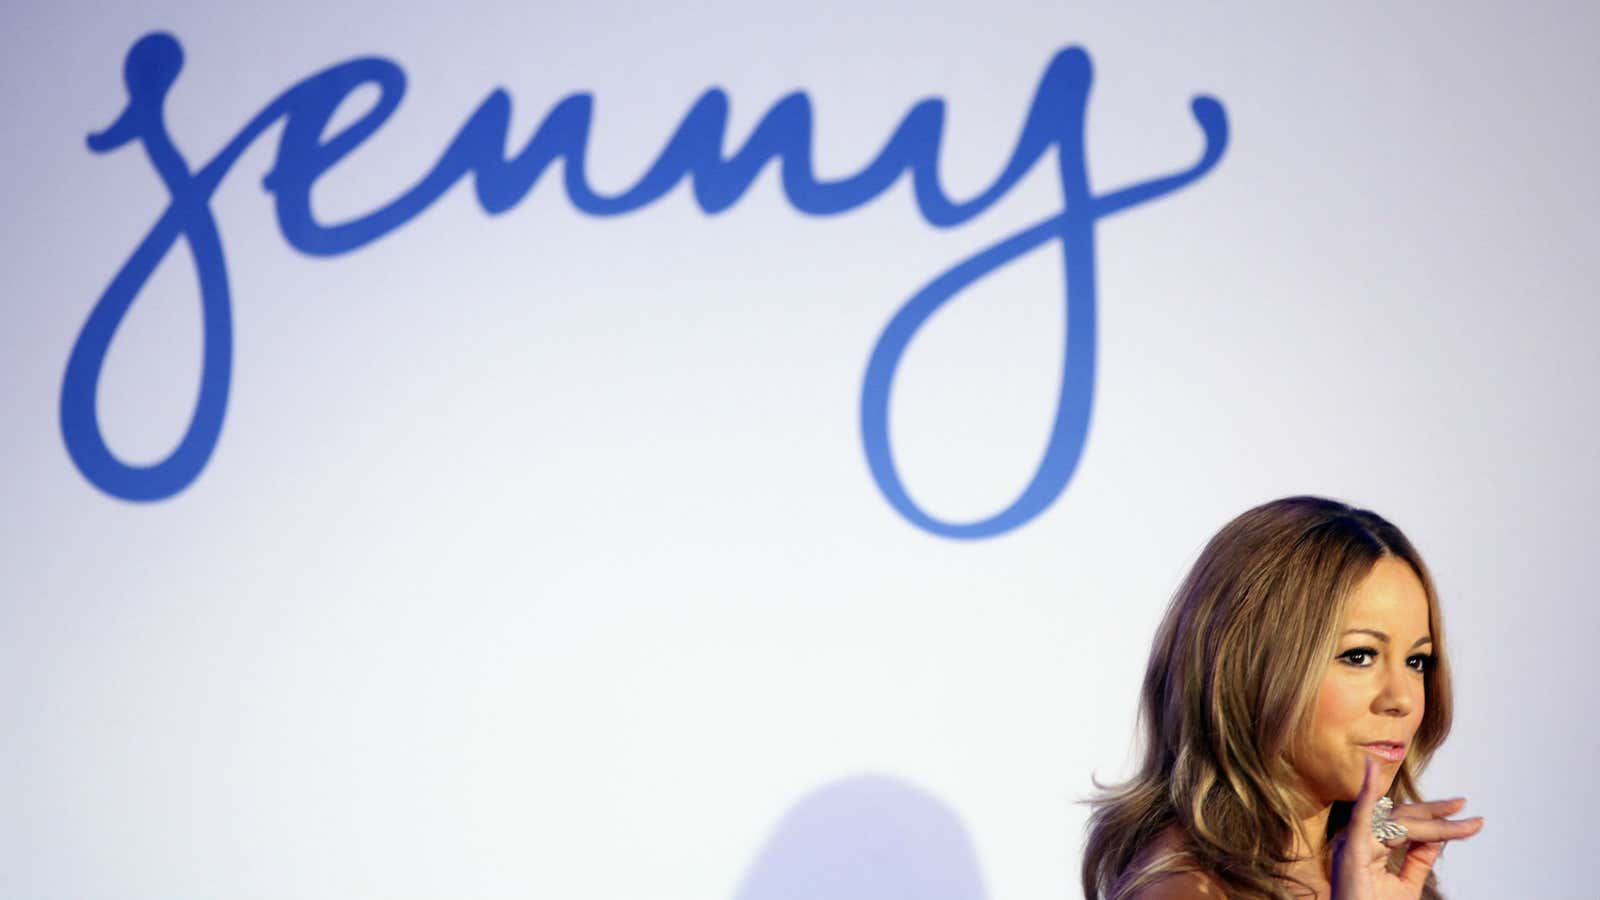 Even having Mariah Carey as “brand ambassador” wasn’t enough for Jenny Craig.